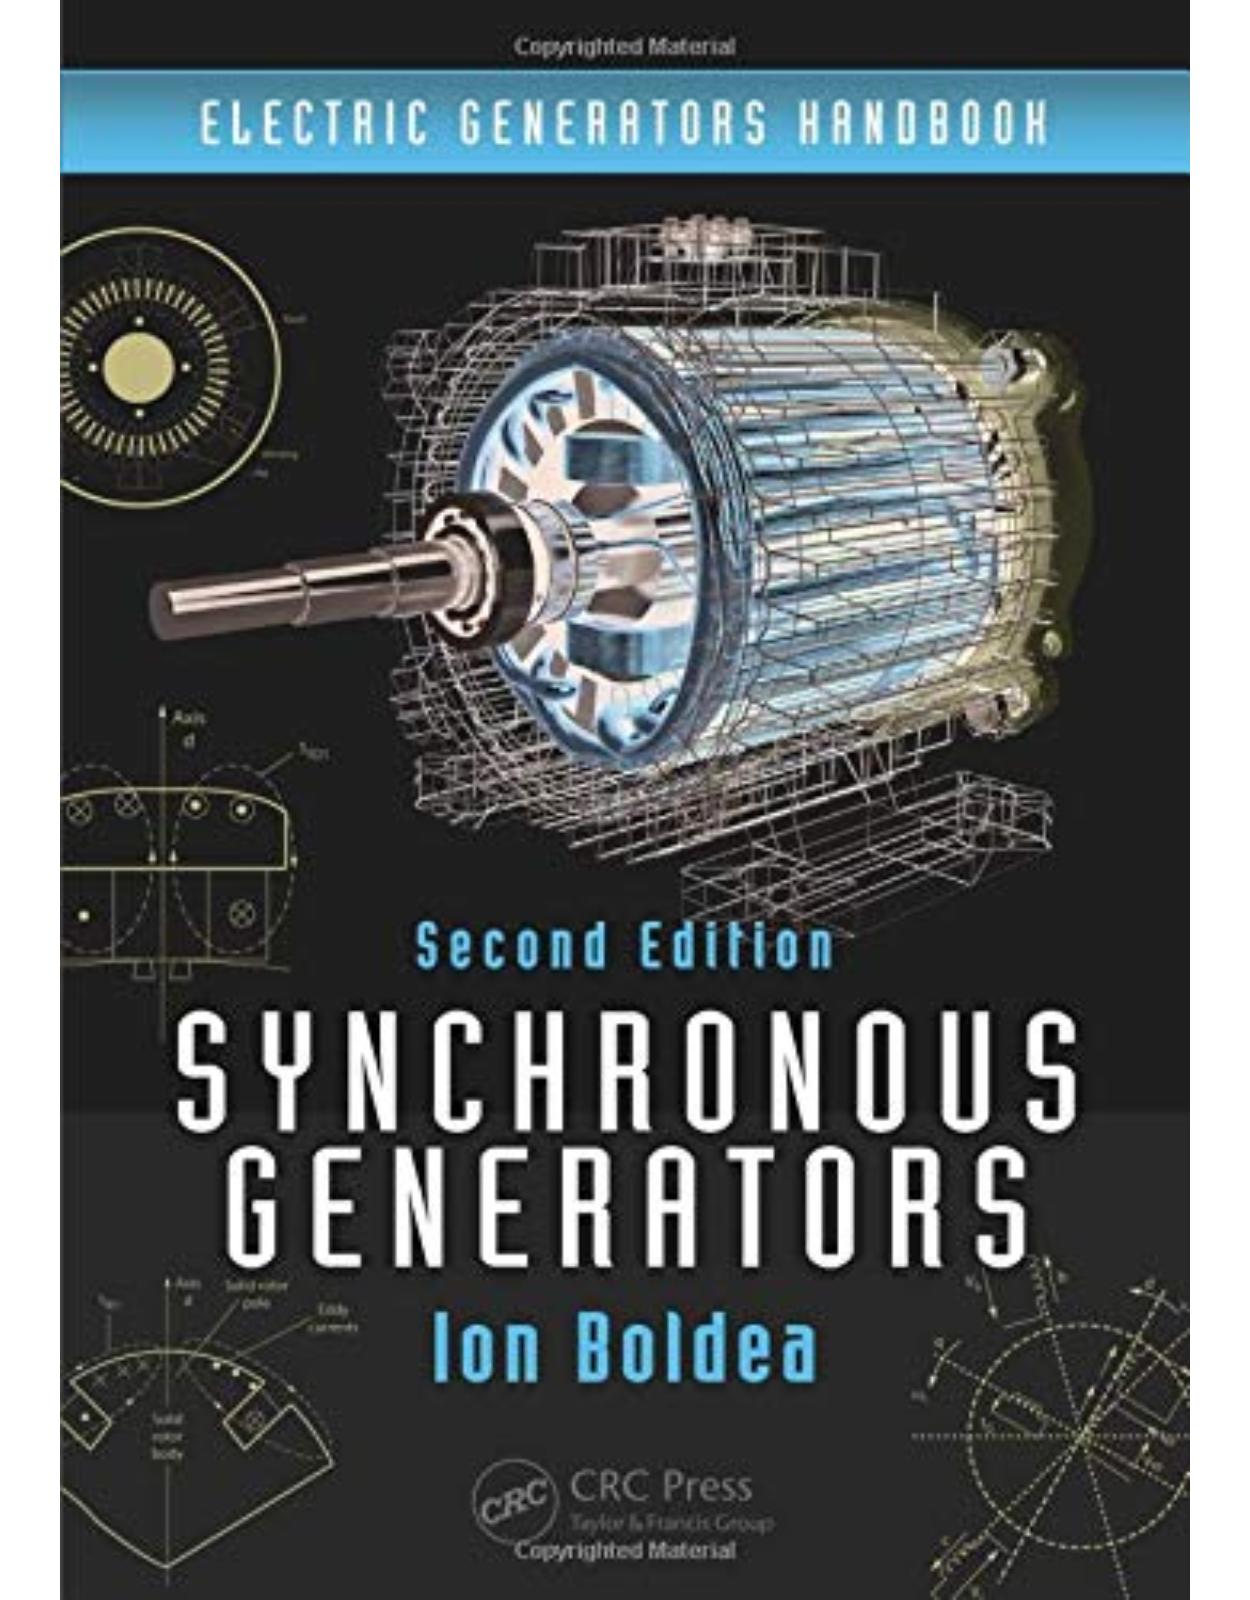 Synchronous Generators, Second Edition